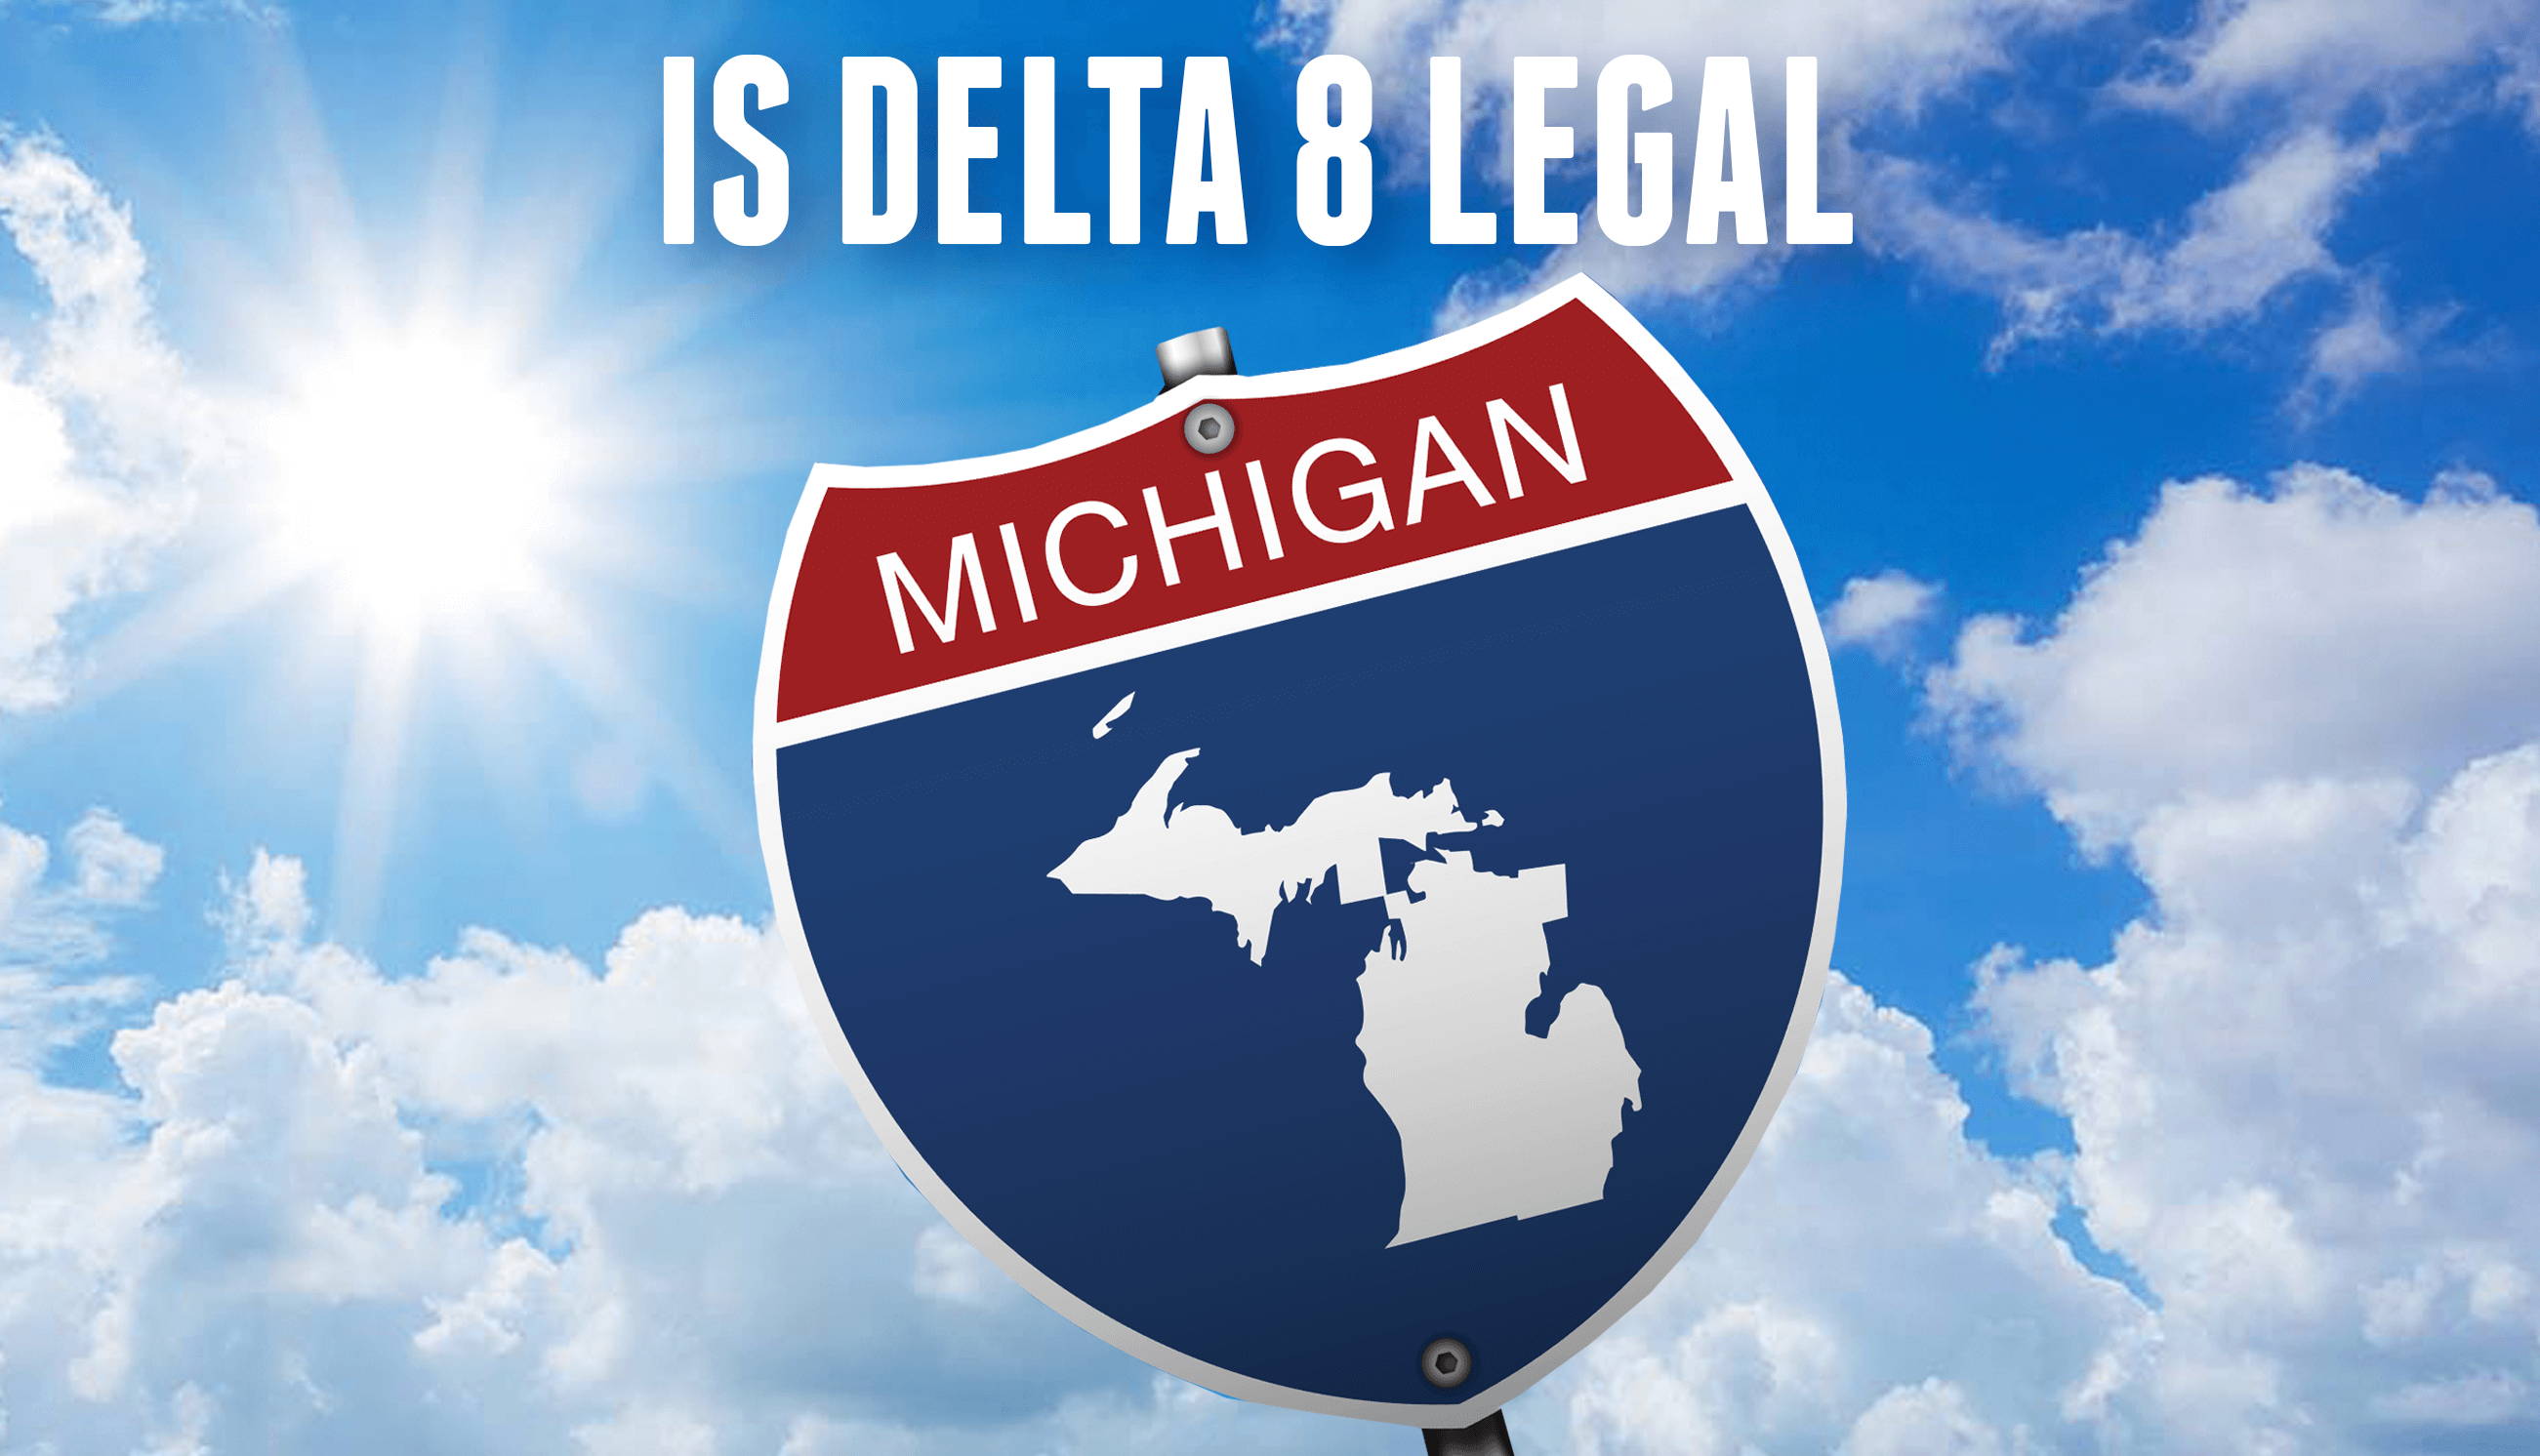 Is Delta 8 legal in Michigan?